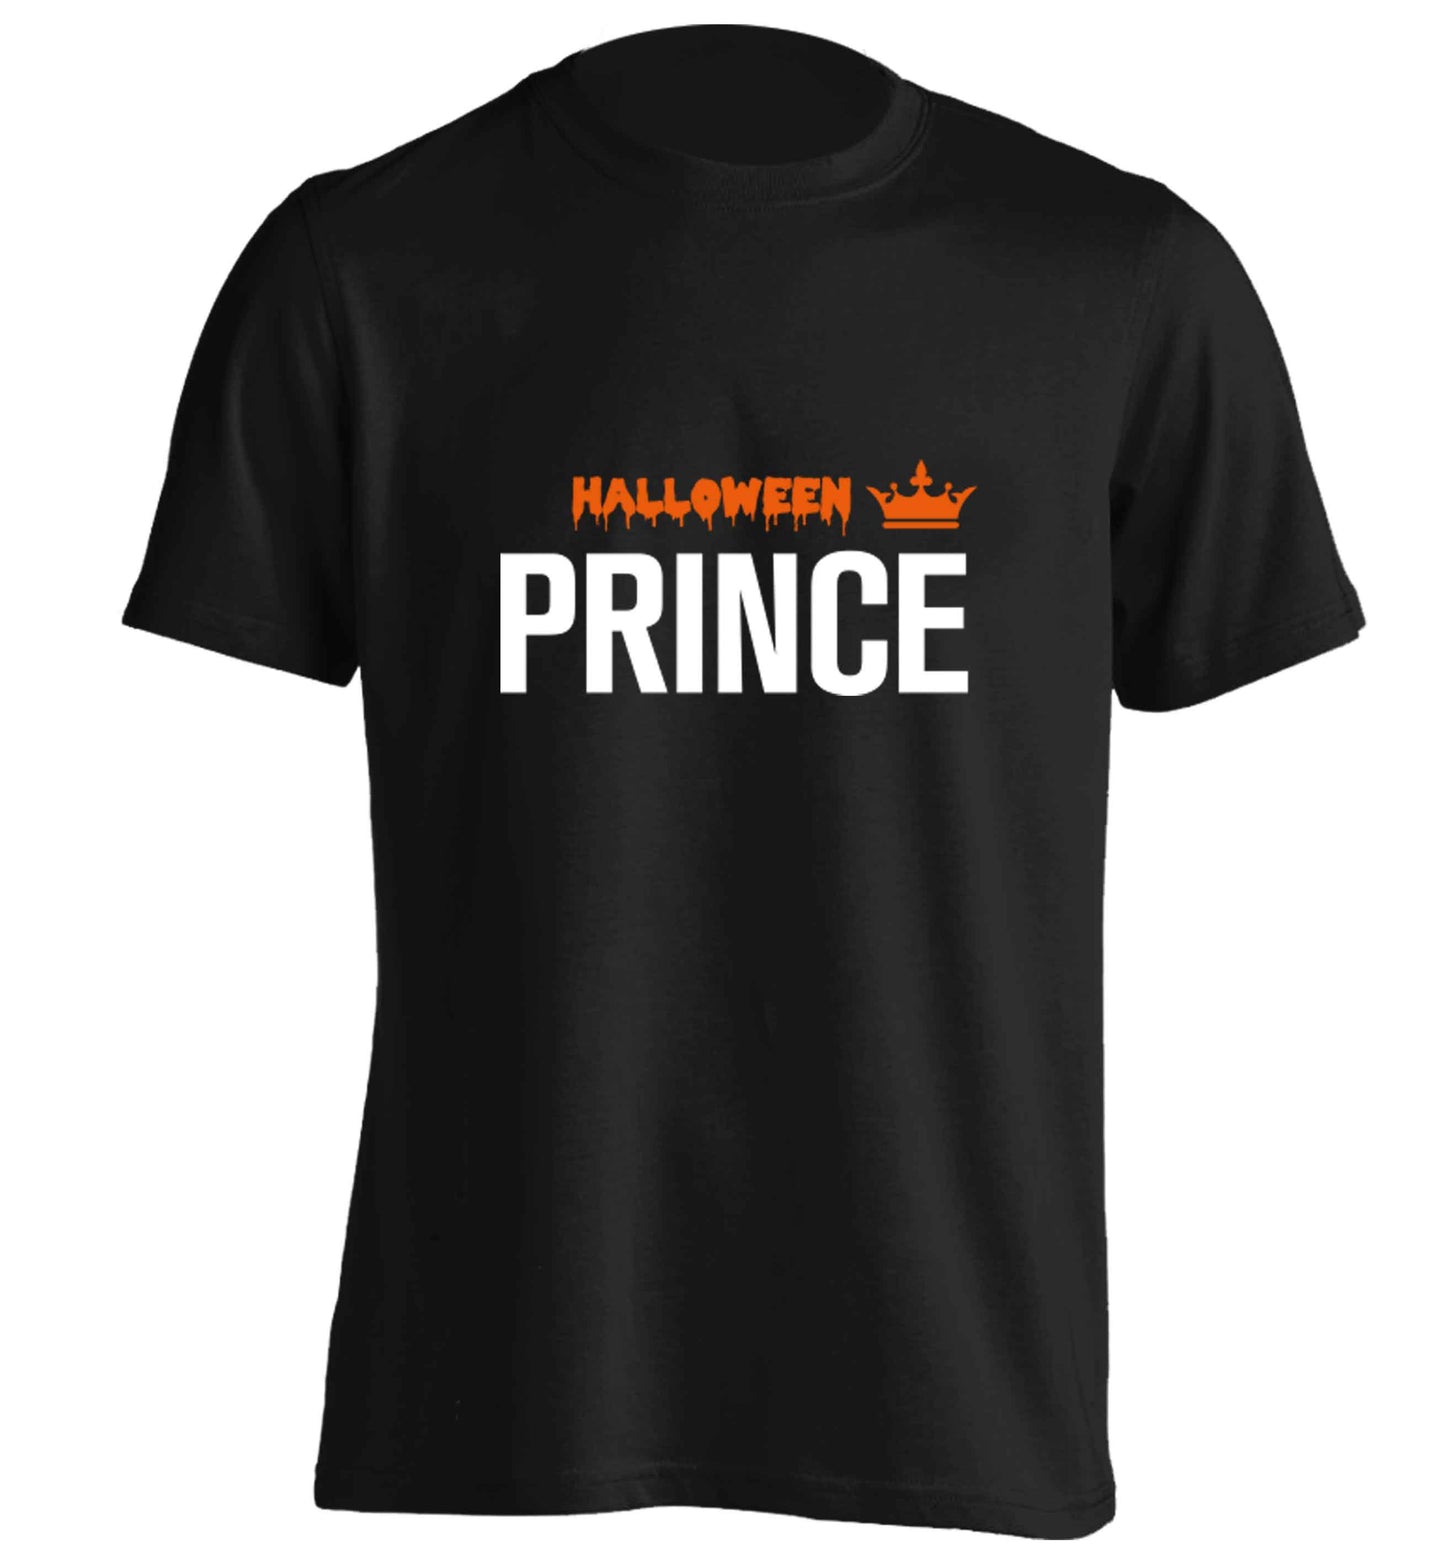 Halloween prince adults unisex black Tshirt 2XL